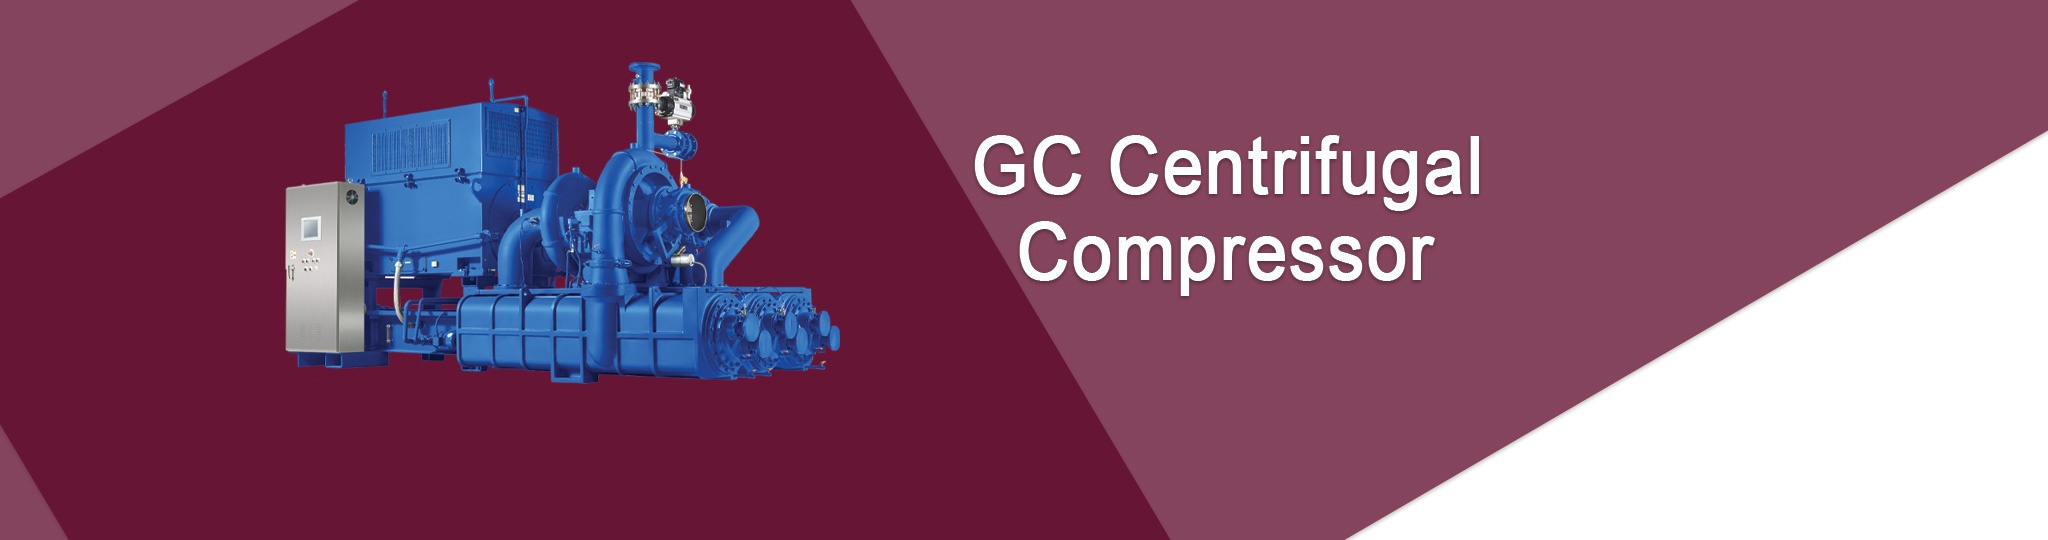 GC Centrifugal Compressor Technology header